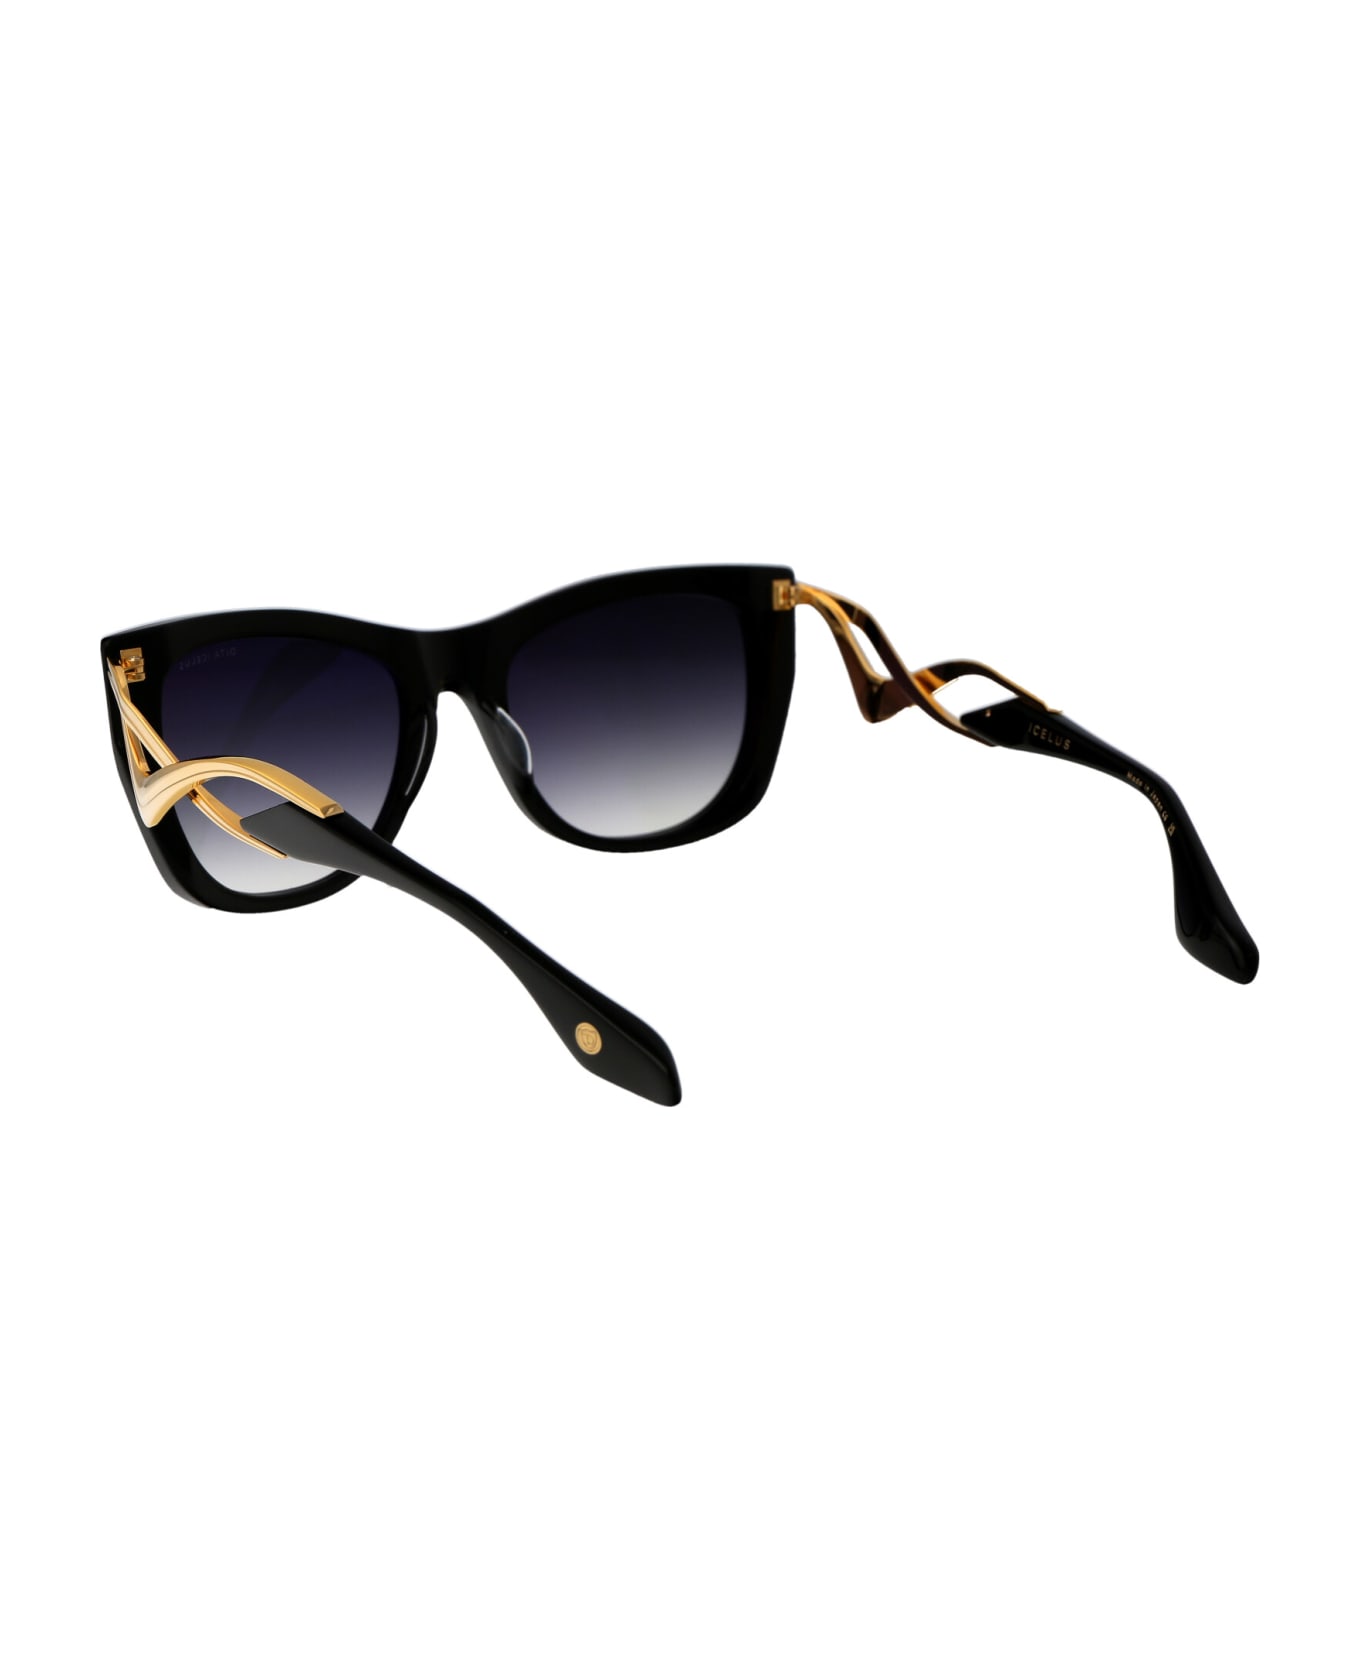 Dita Icelus Sunglasses - 001 BLACK YELLOW GOLD